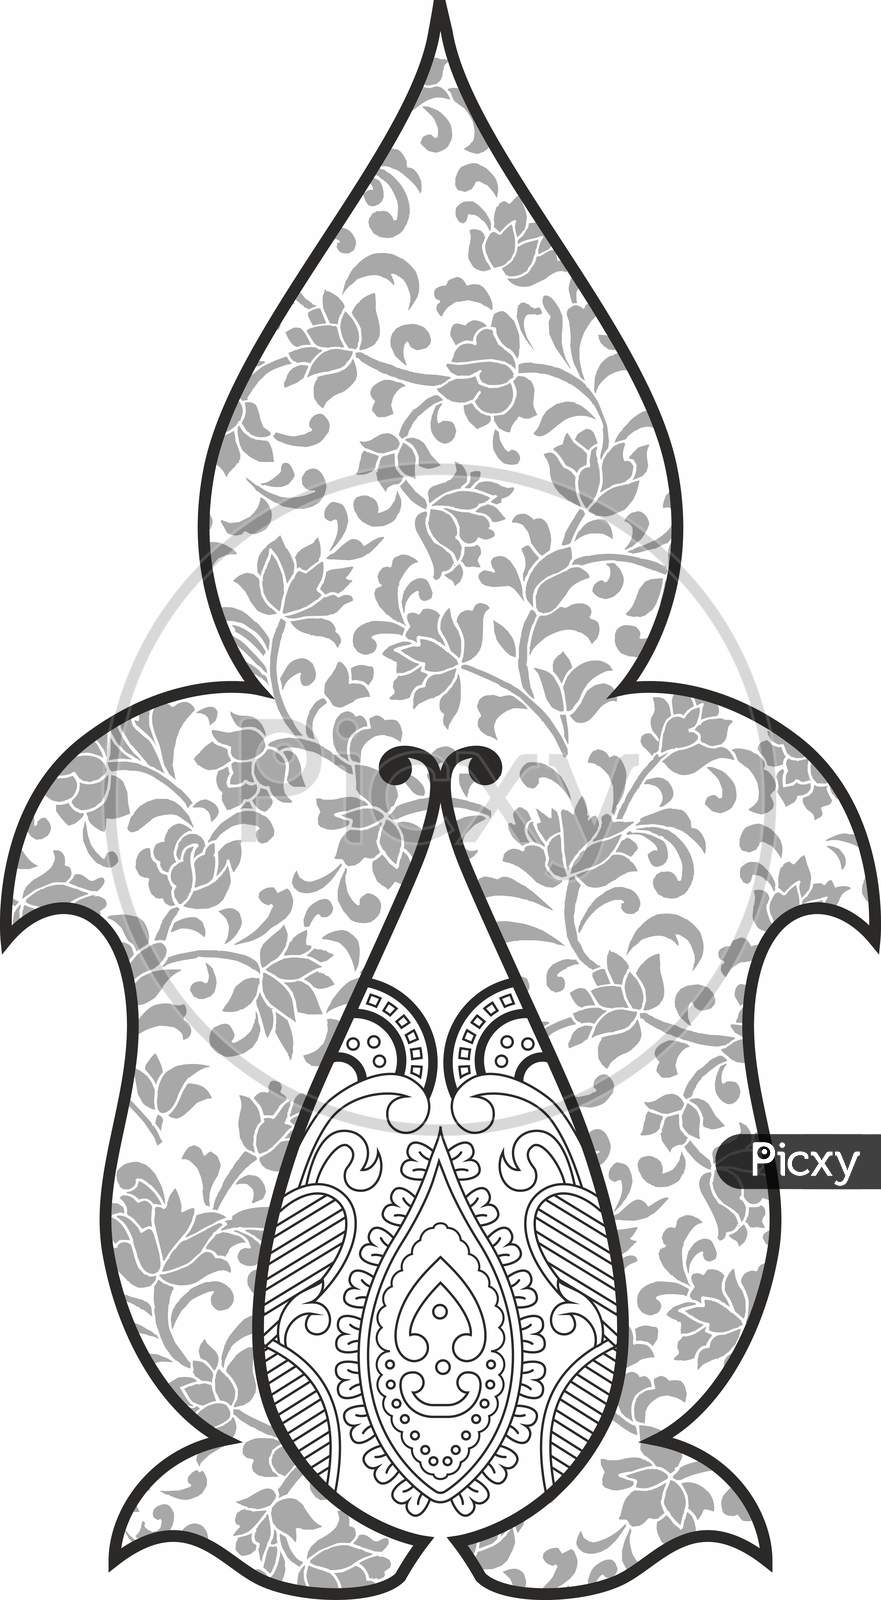 Mandala Design Of Element With Decorative Circle Pattern